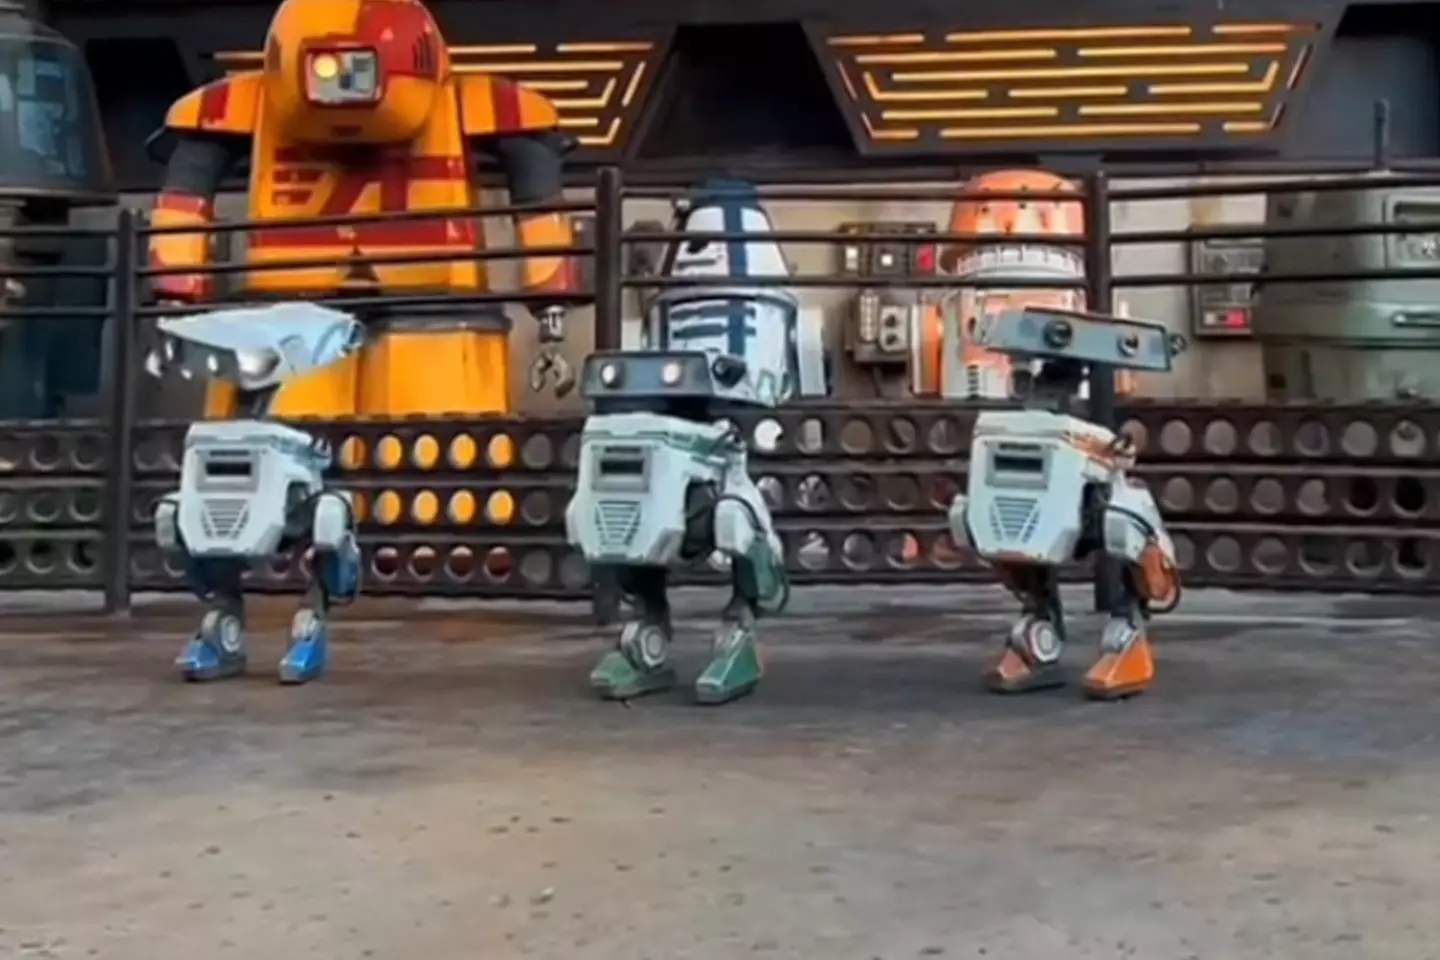 The little droids have landed at Disneyland.